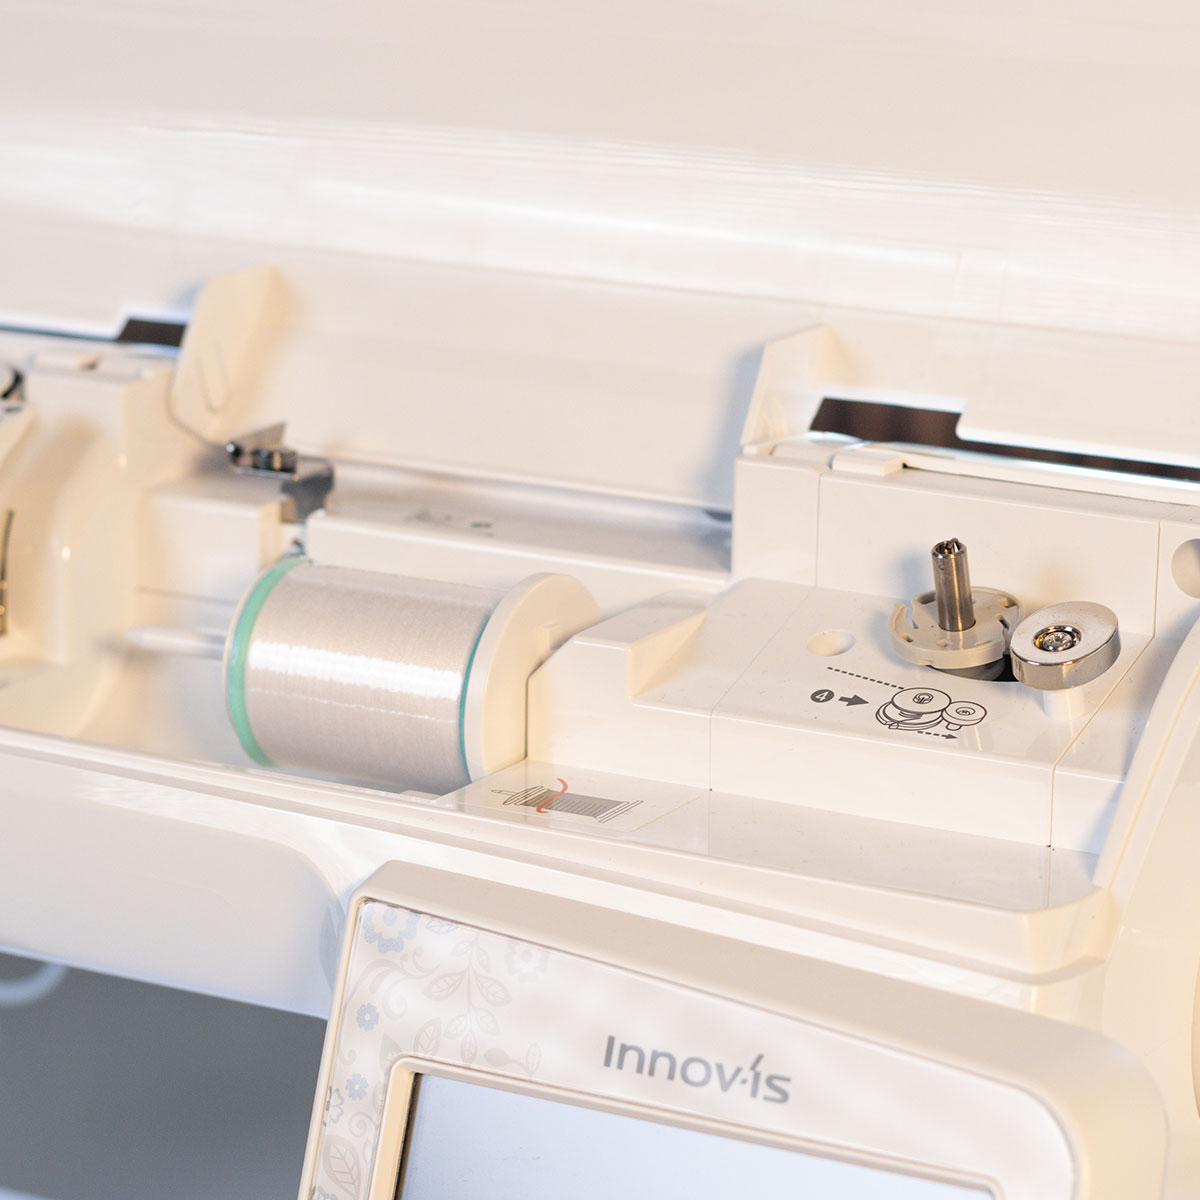 Innov-is NV880E embroidery machine